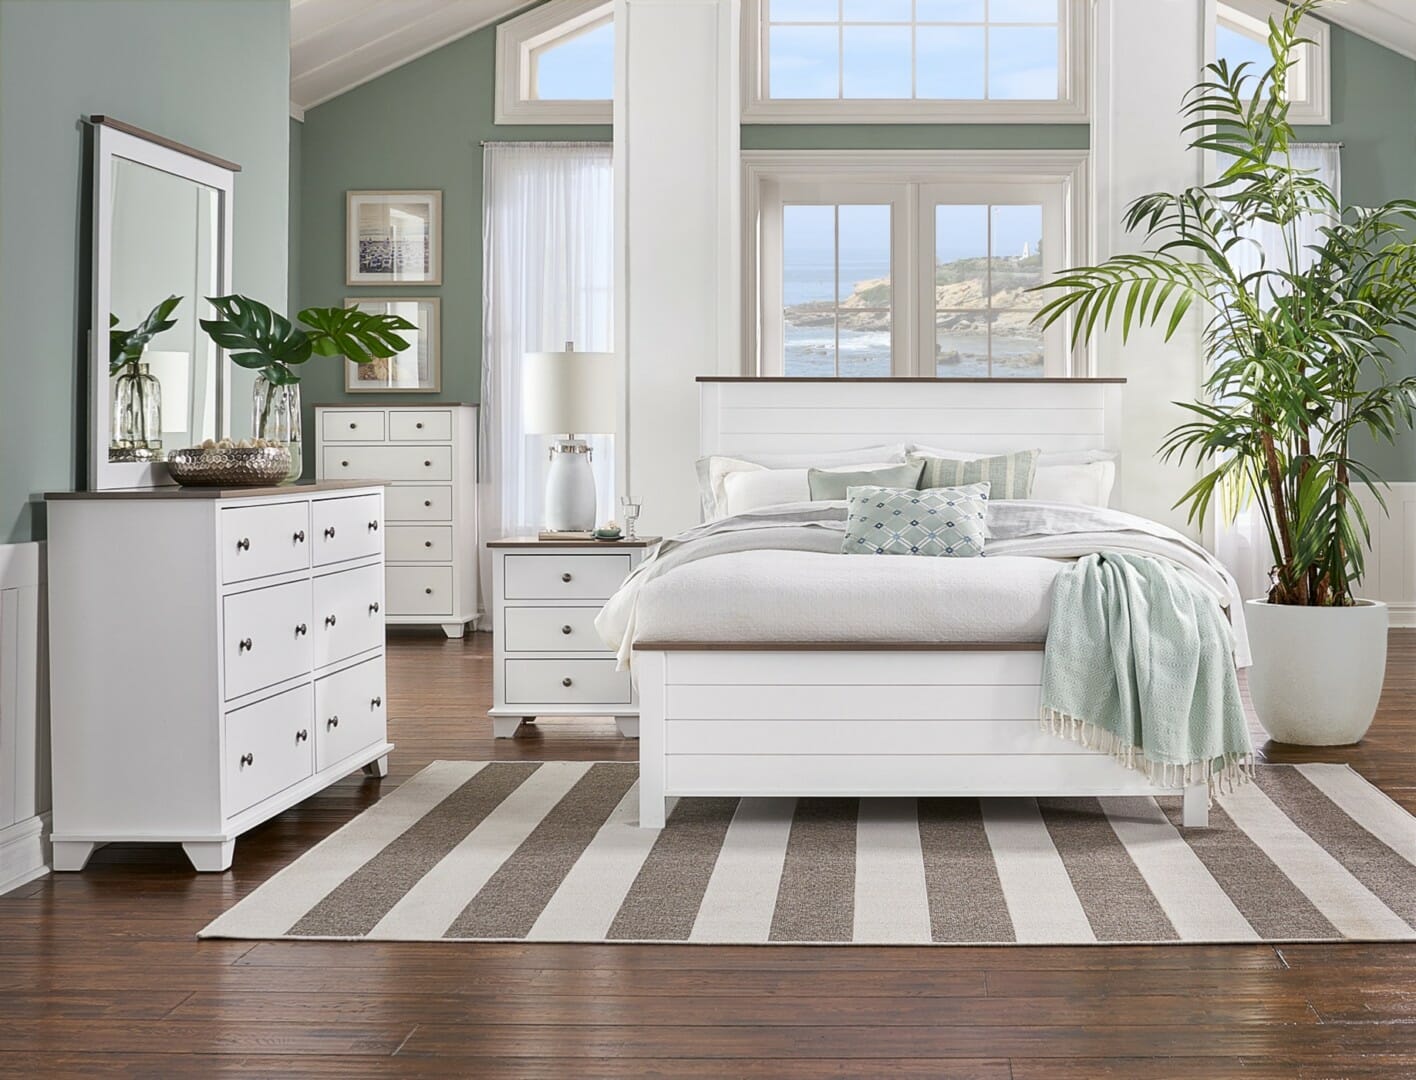 portland stone bedroom furniture